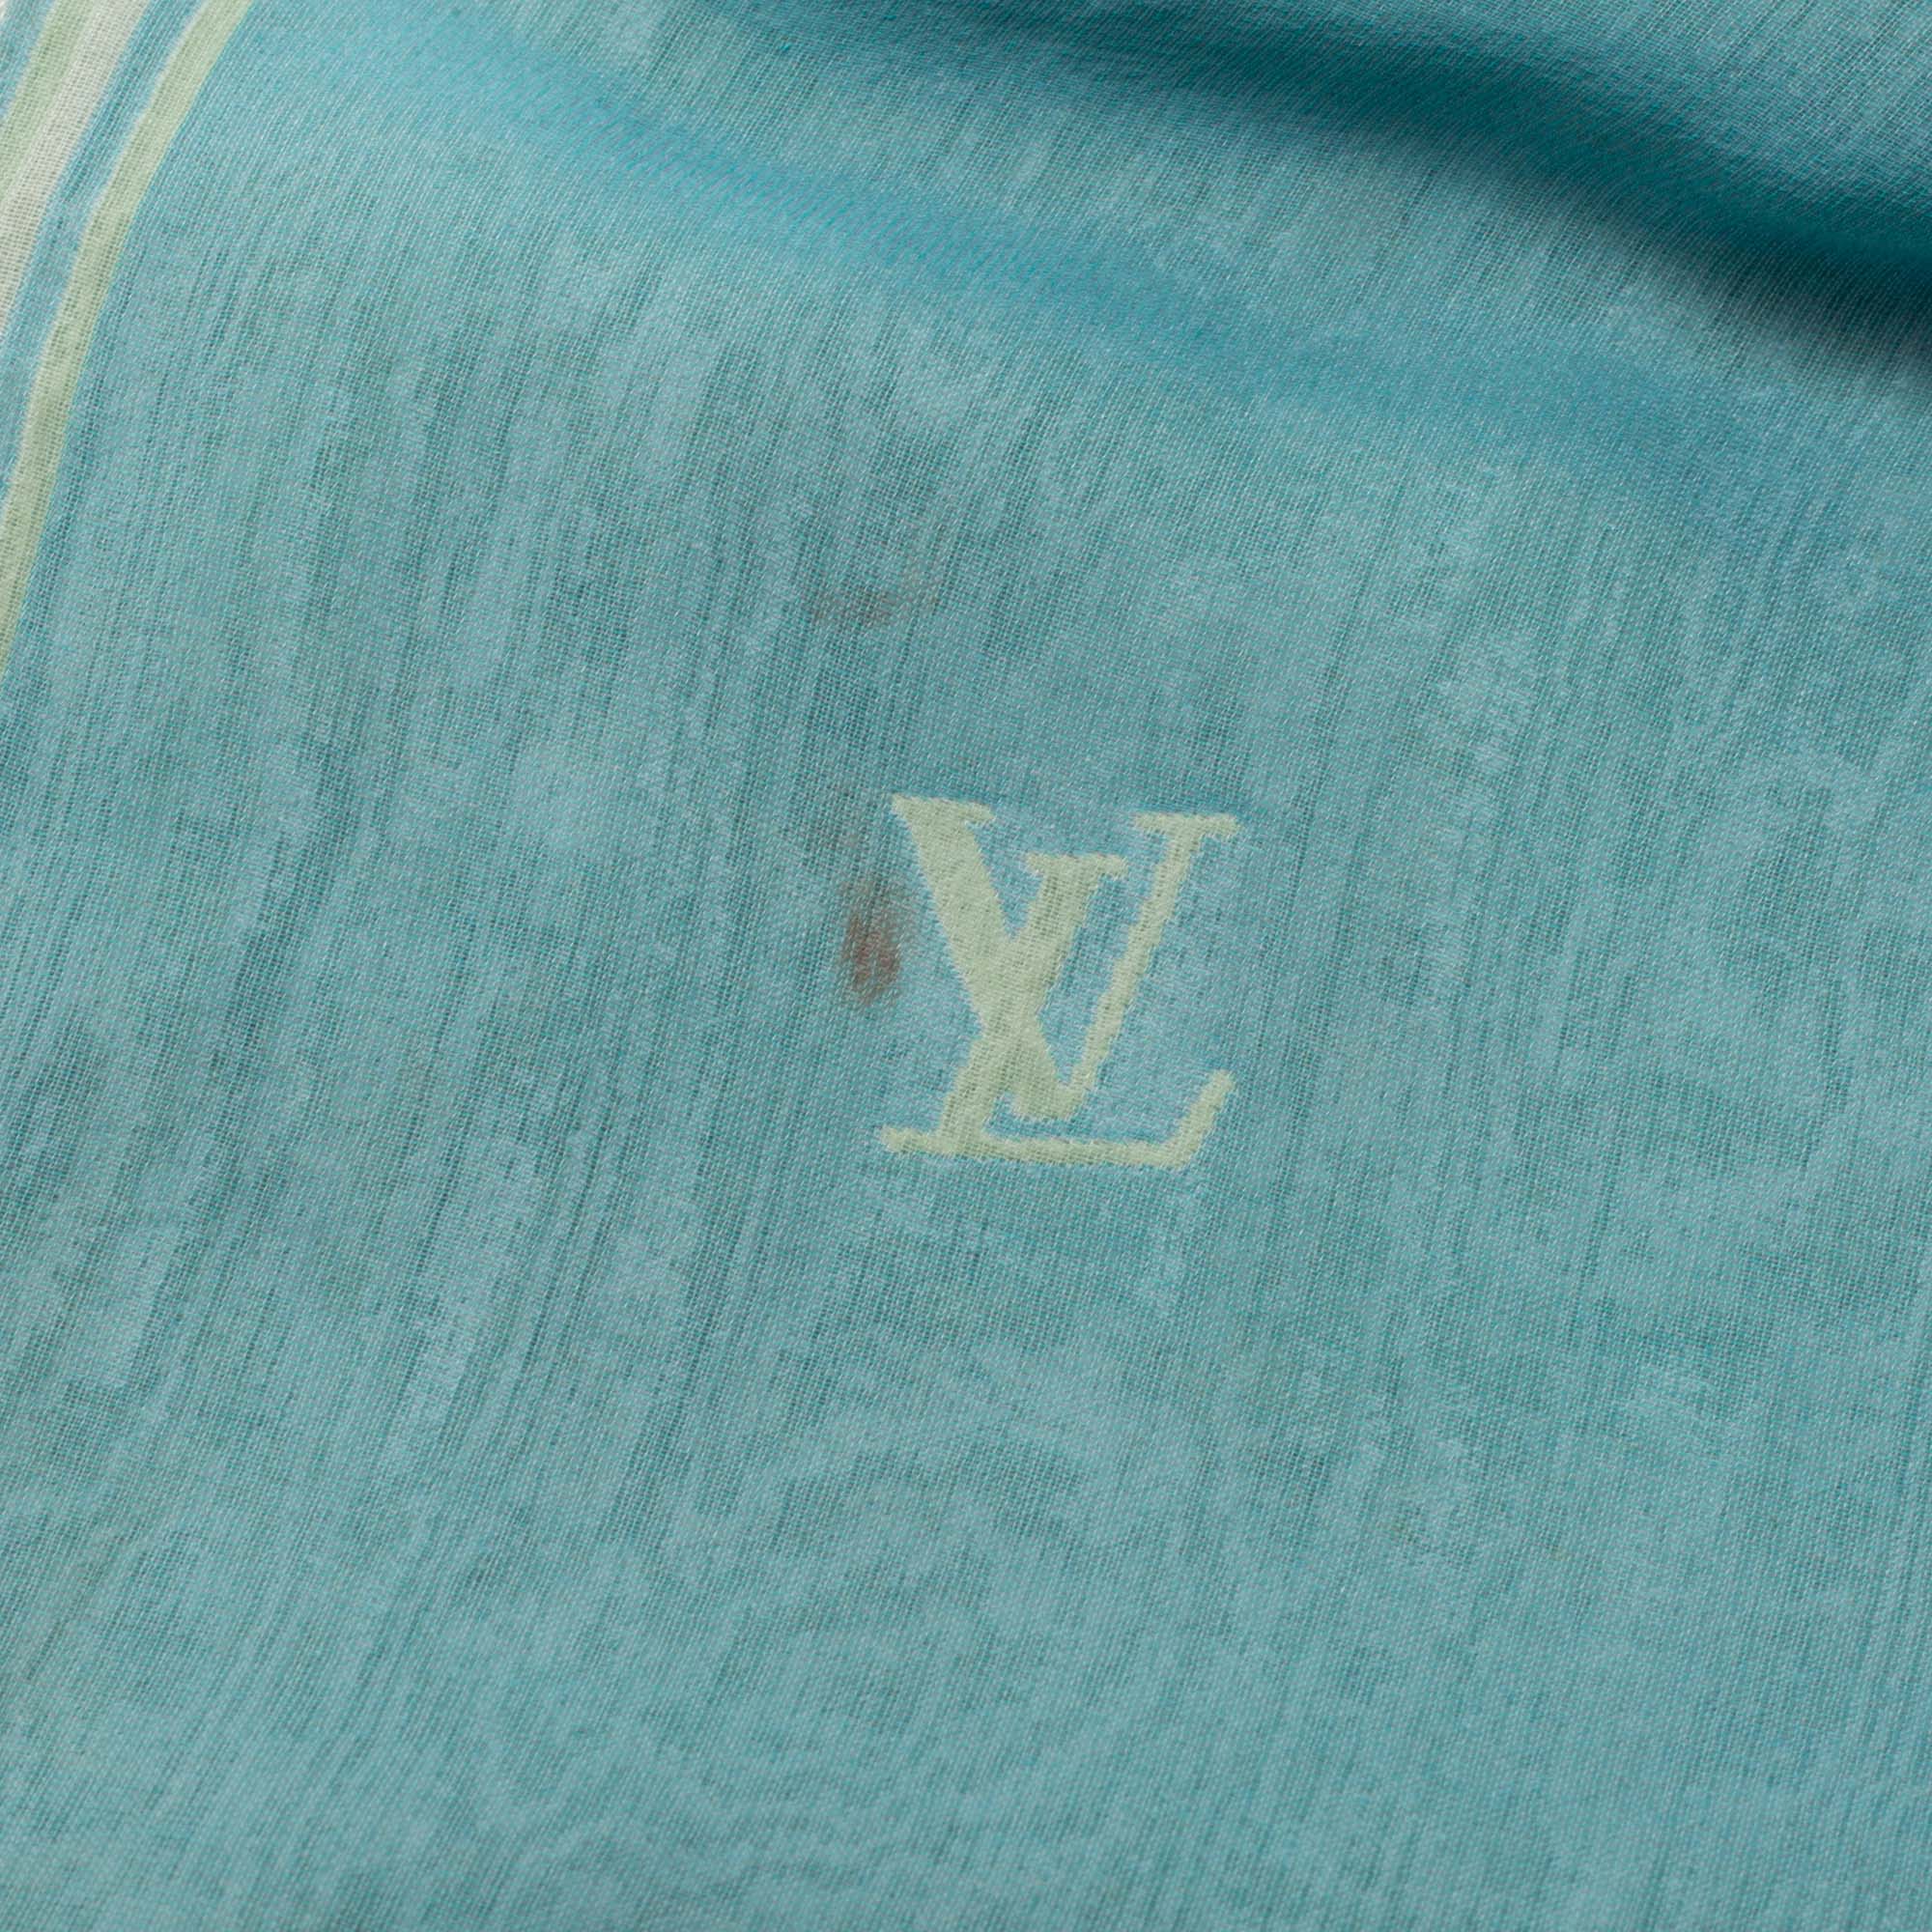 Louis Vuitton Turquoise Silk Monogram Oblong Scarf - Louis Vuitton CA